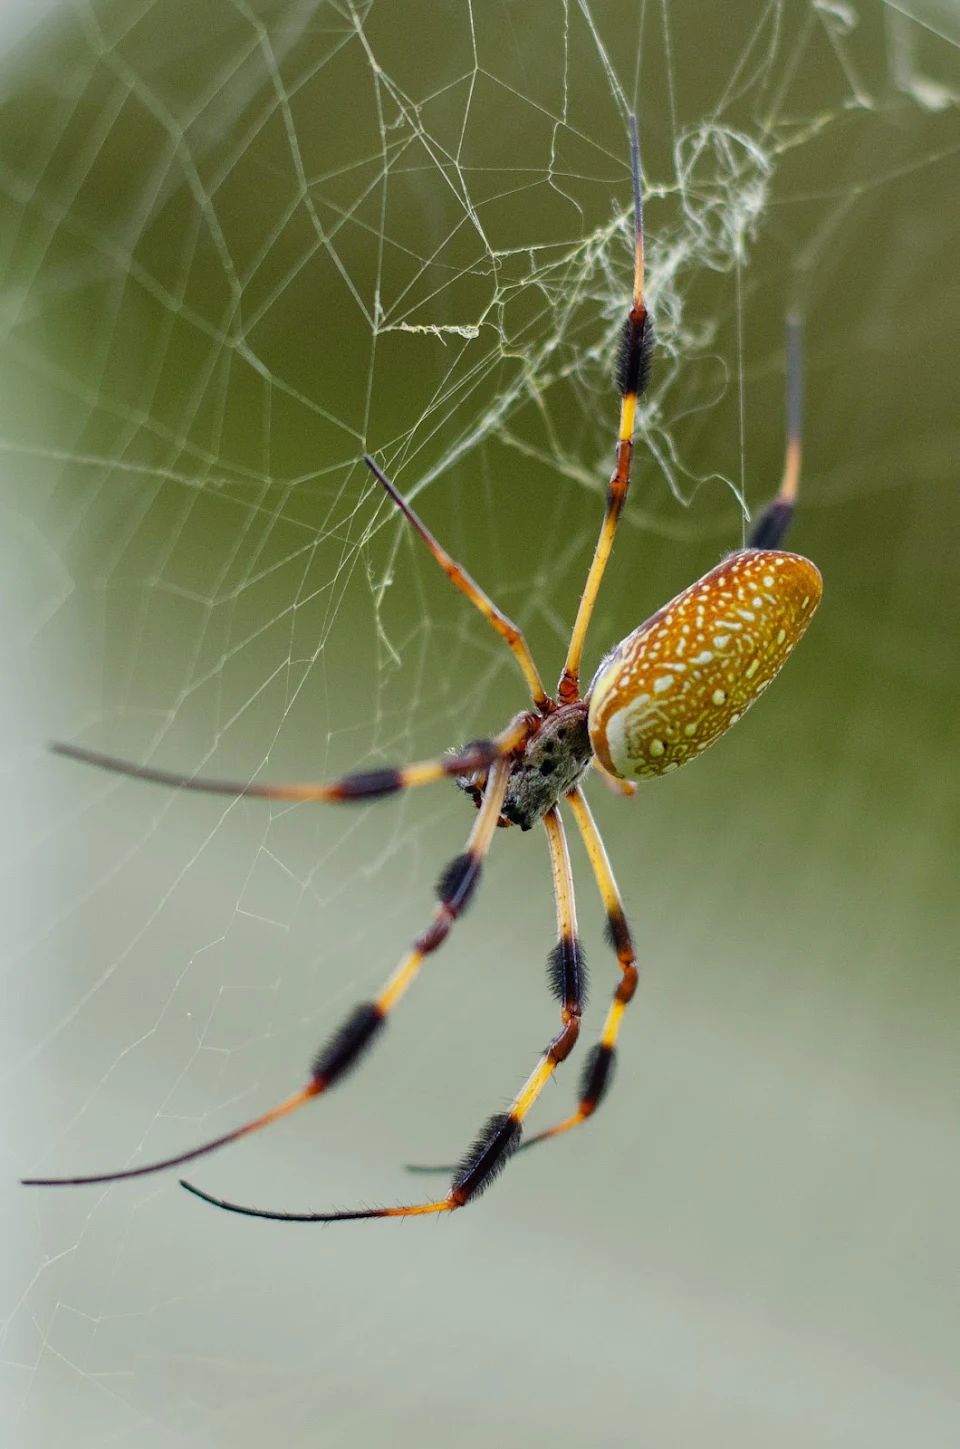 TW for spider - Trichonephila clavipes, female